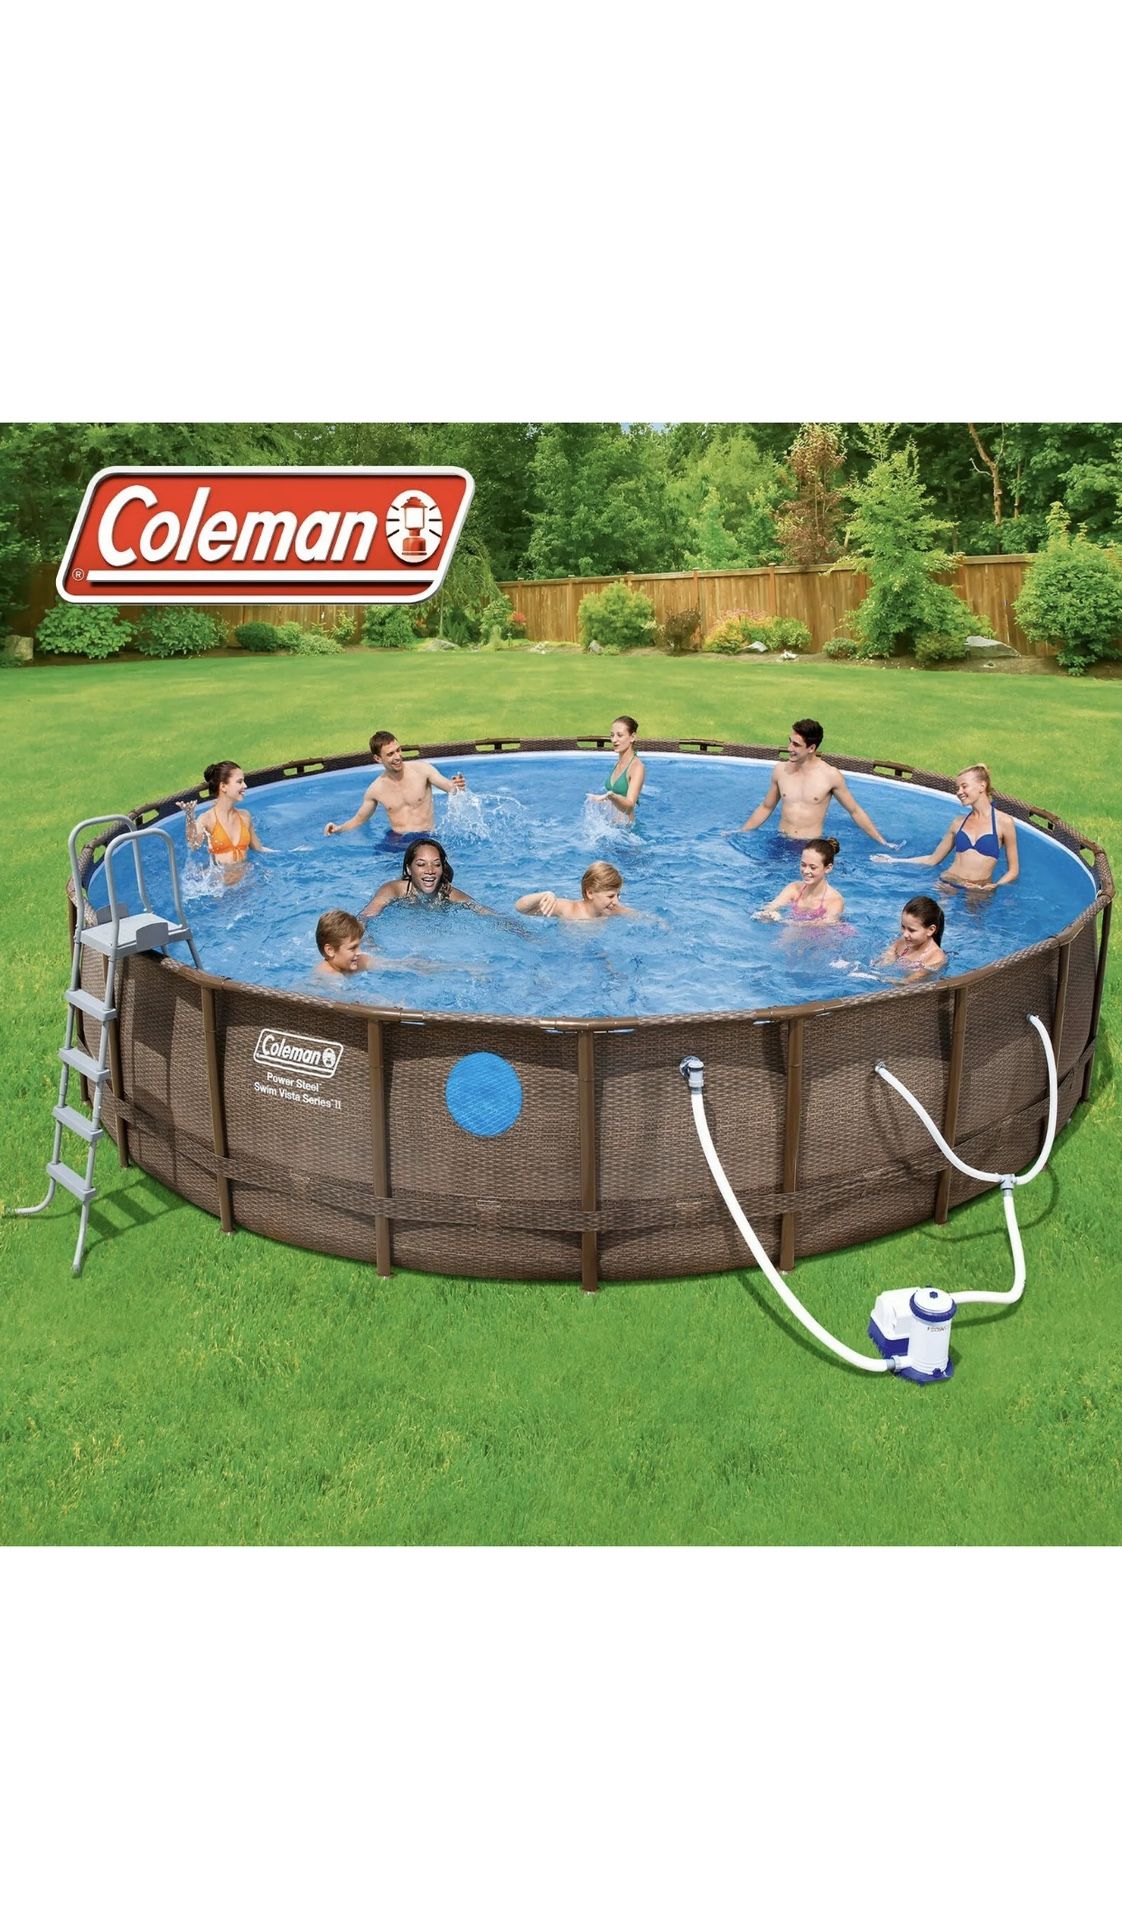 Coleman Power Steel Swim Vista Series 2 - 22ft x 52in Premium Pool HAVE IN HAND!